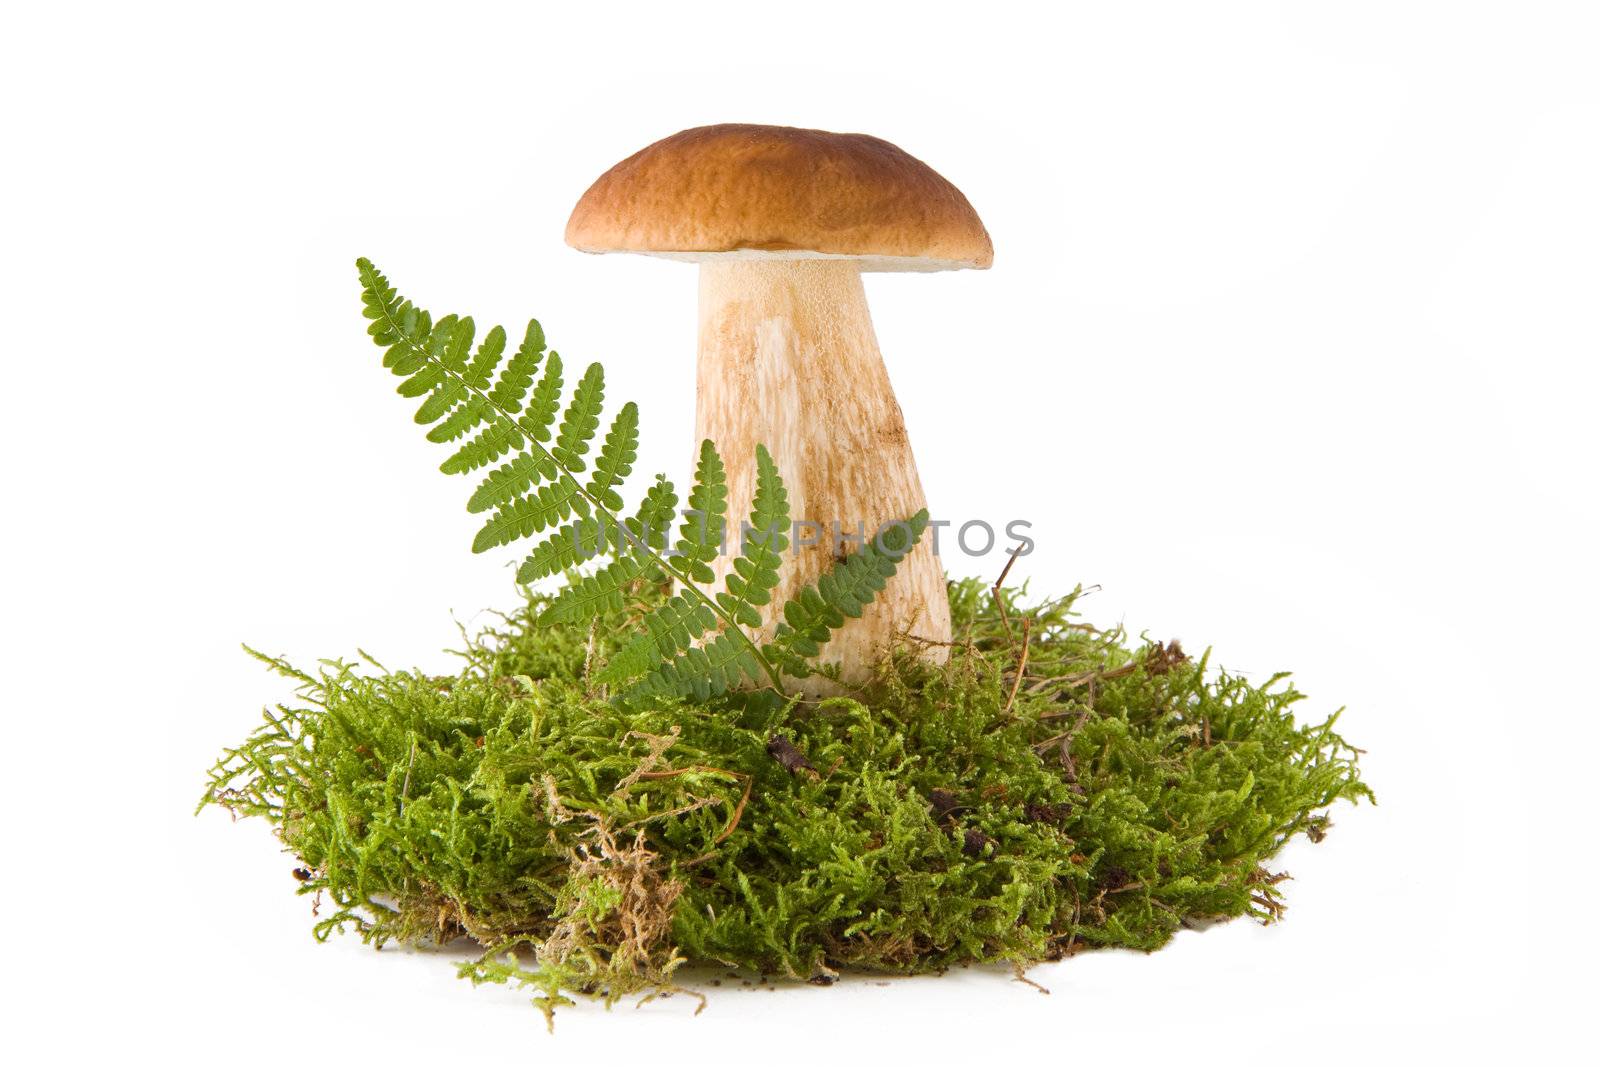 One mushroom by Gbuglok